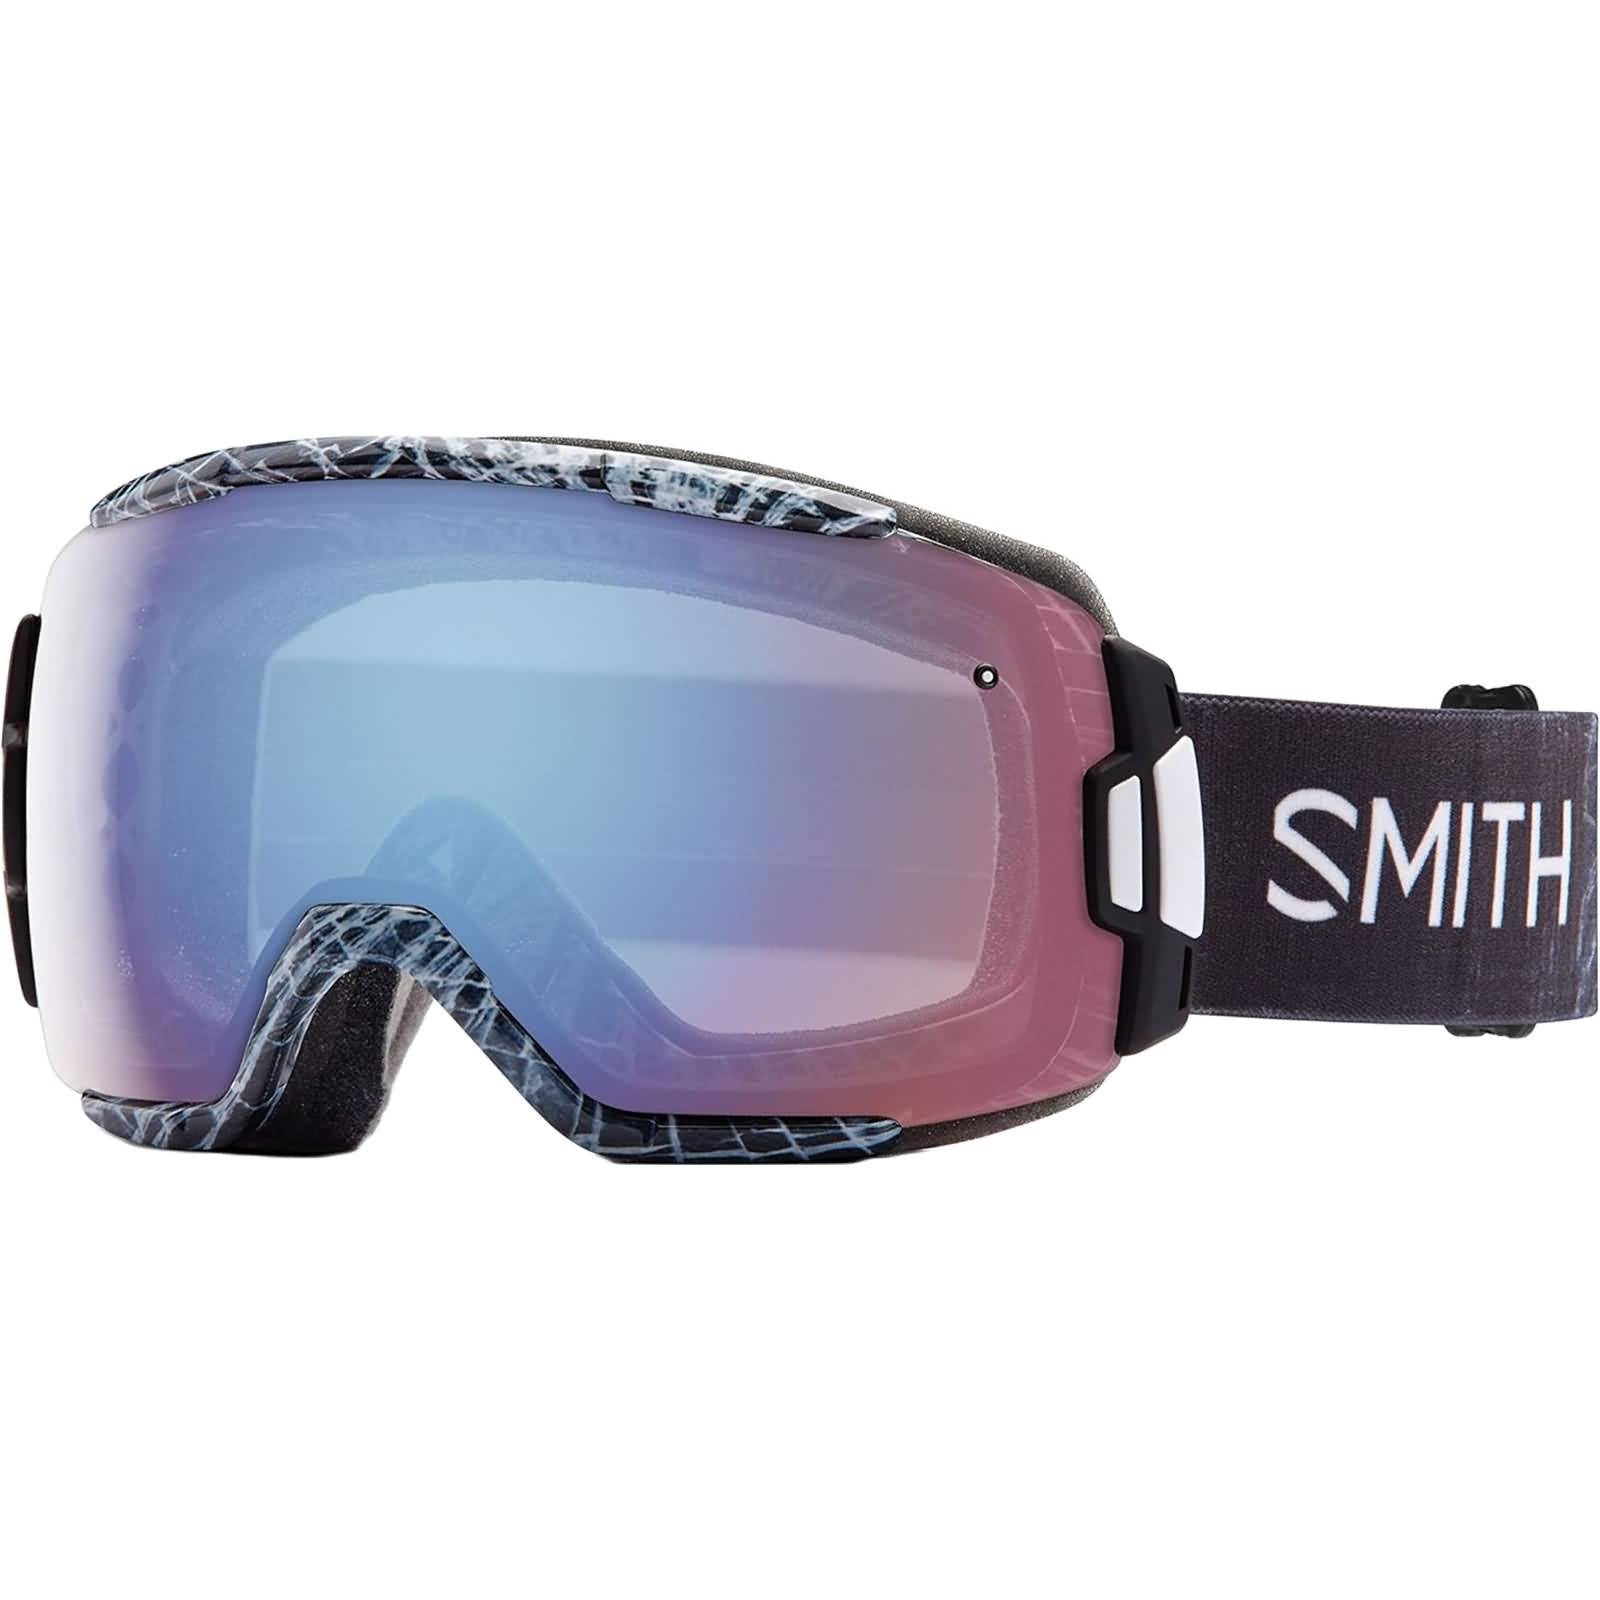 Smith Optics Vice Spherical Series Adult Snow Goggles-VC6ISHT16